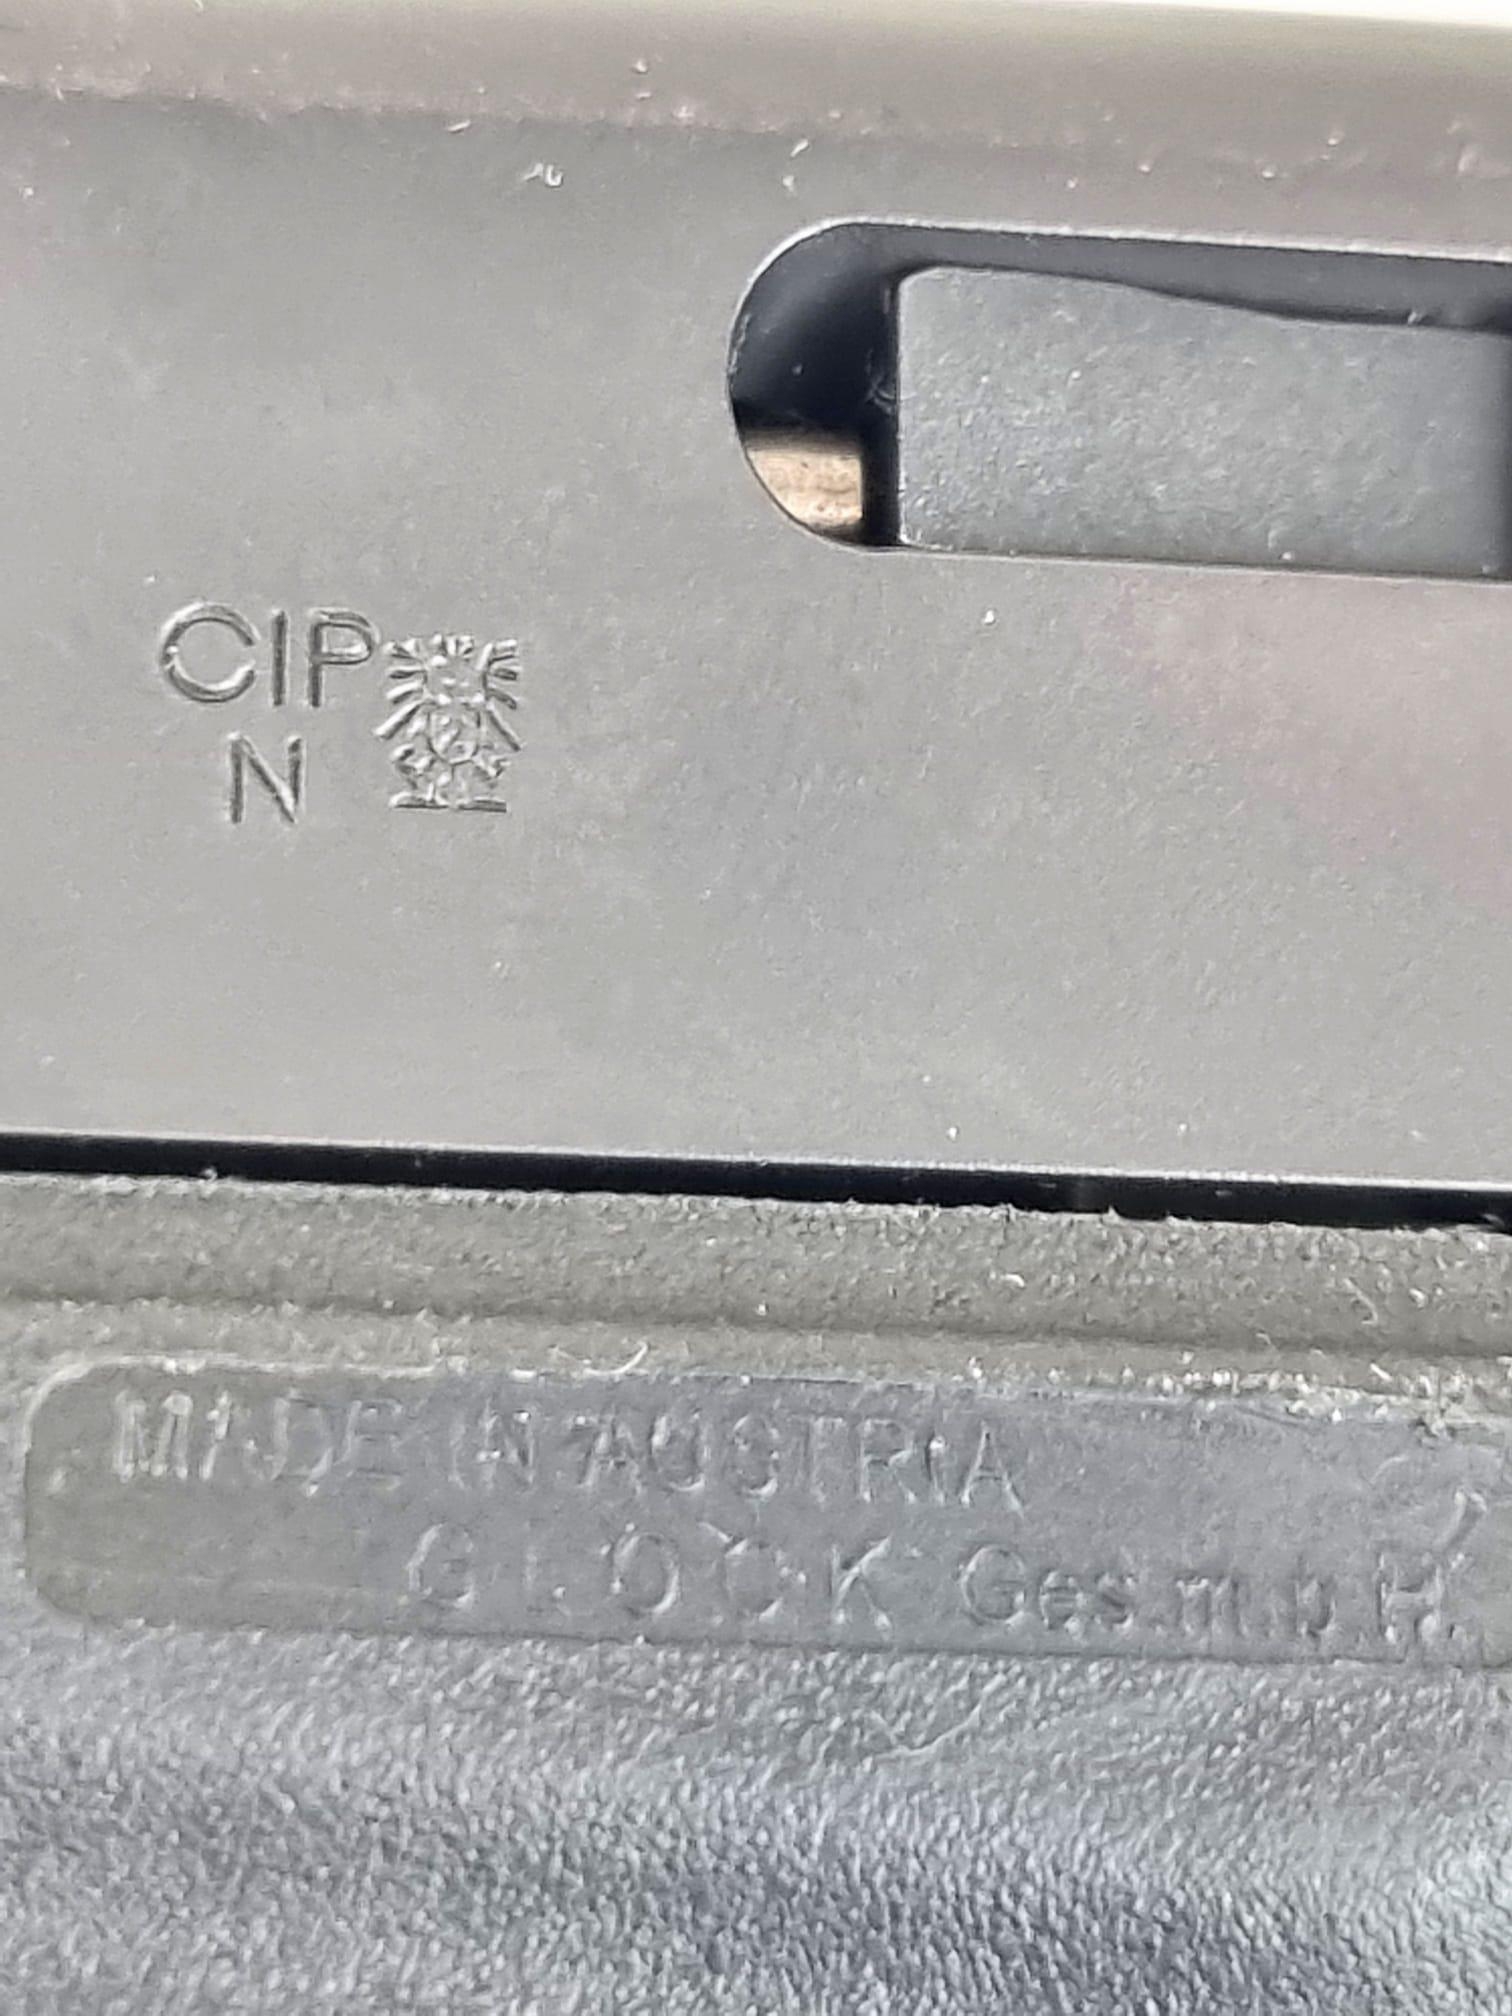 A Deactivated 9mm Model G43 Slimline Semi-Automatic Glock Pistol. - Image 8 of 22